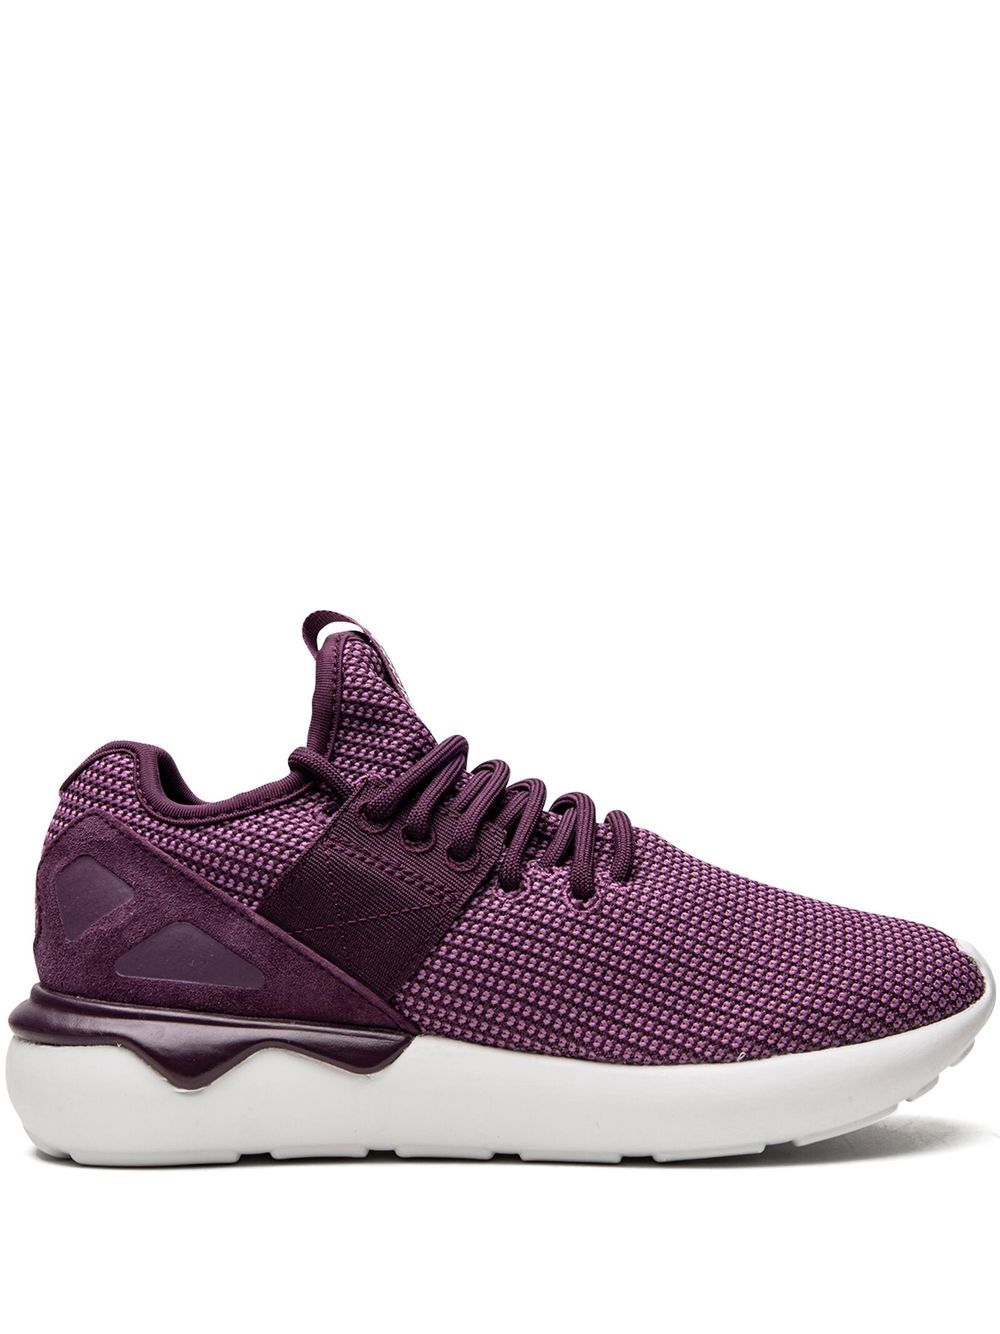 adidas Tubular Runner S sneakers - Purple von adidas